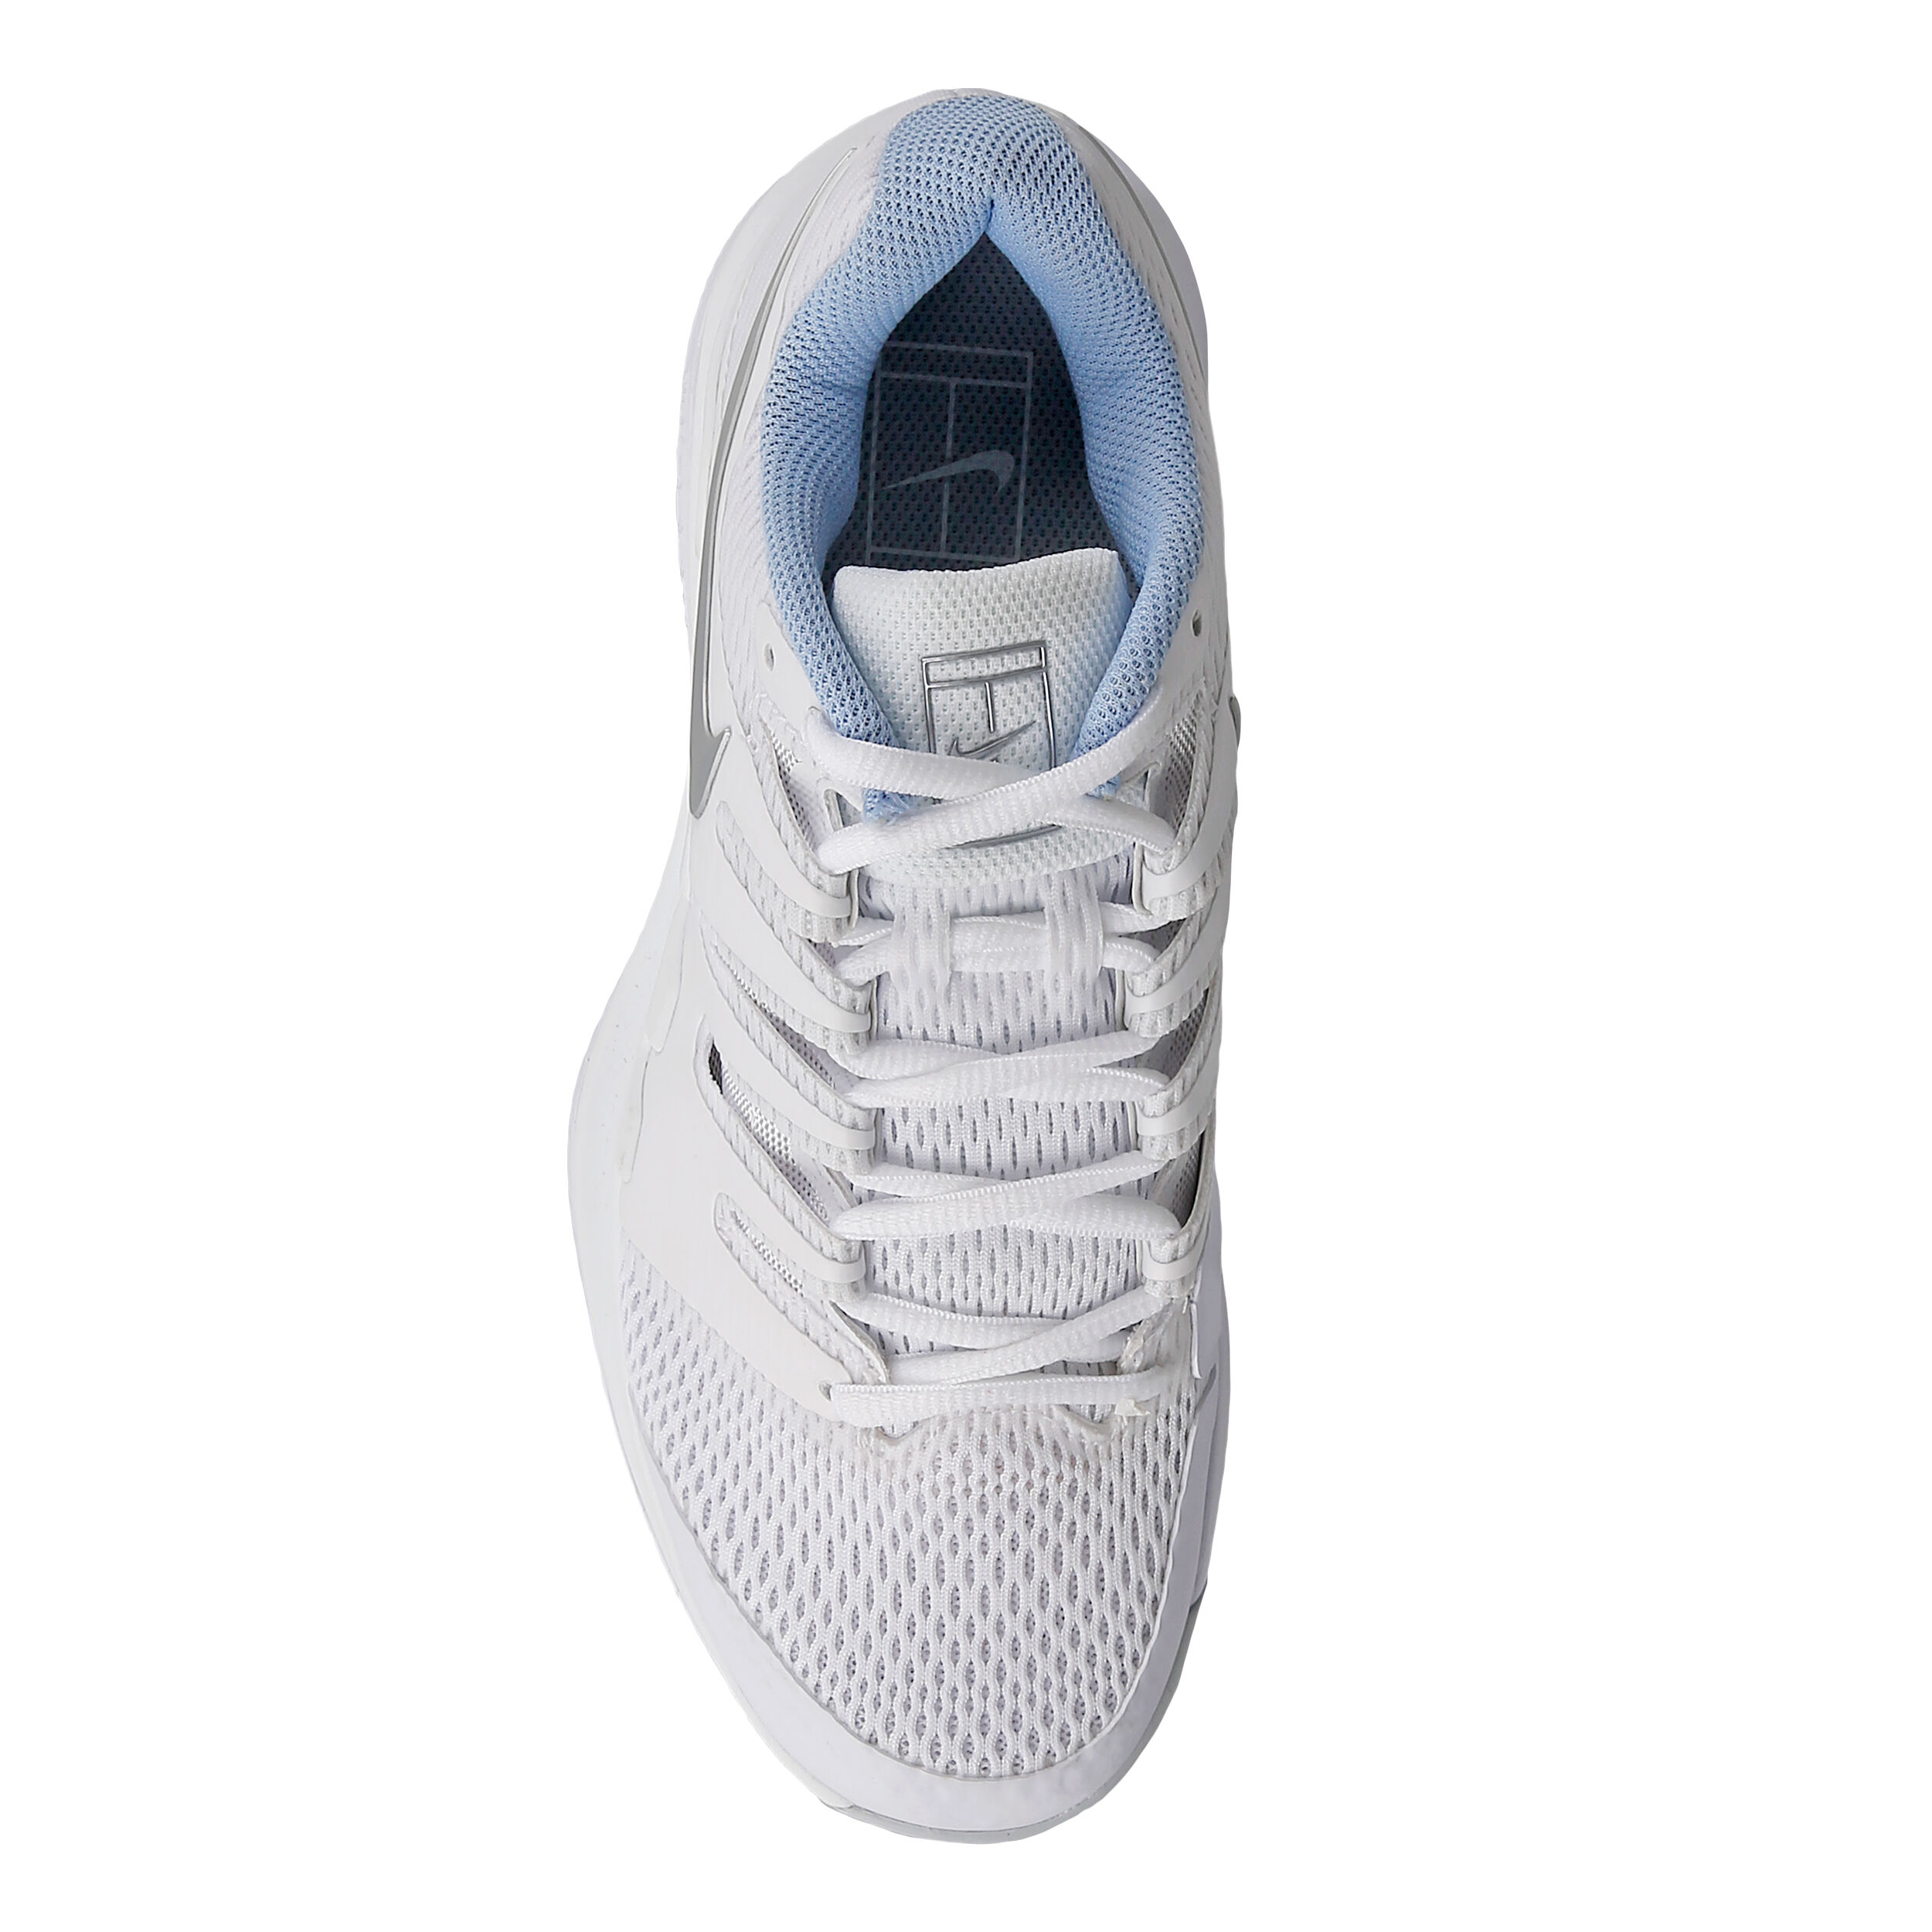 nike women's air zoom vapor x tennis shoes white and metallic silver